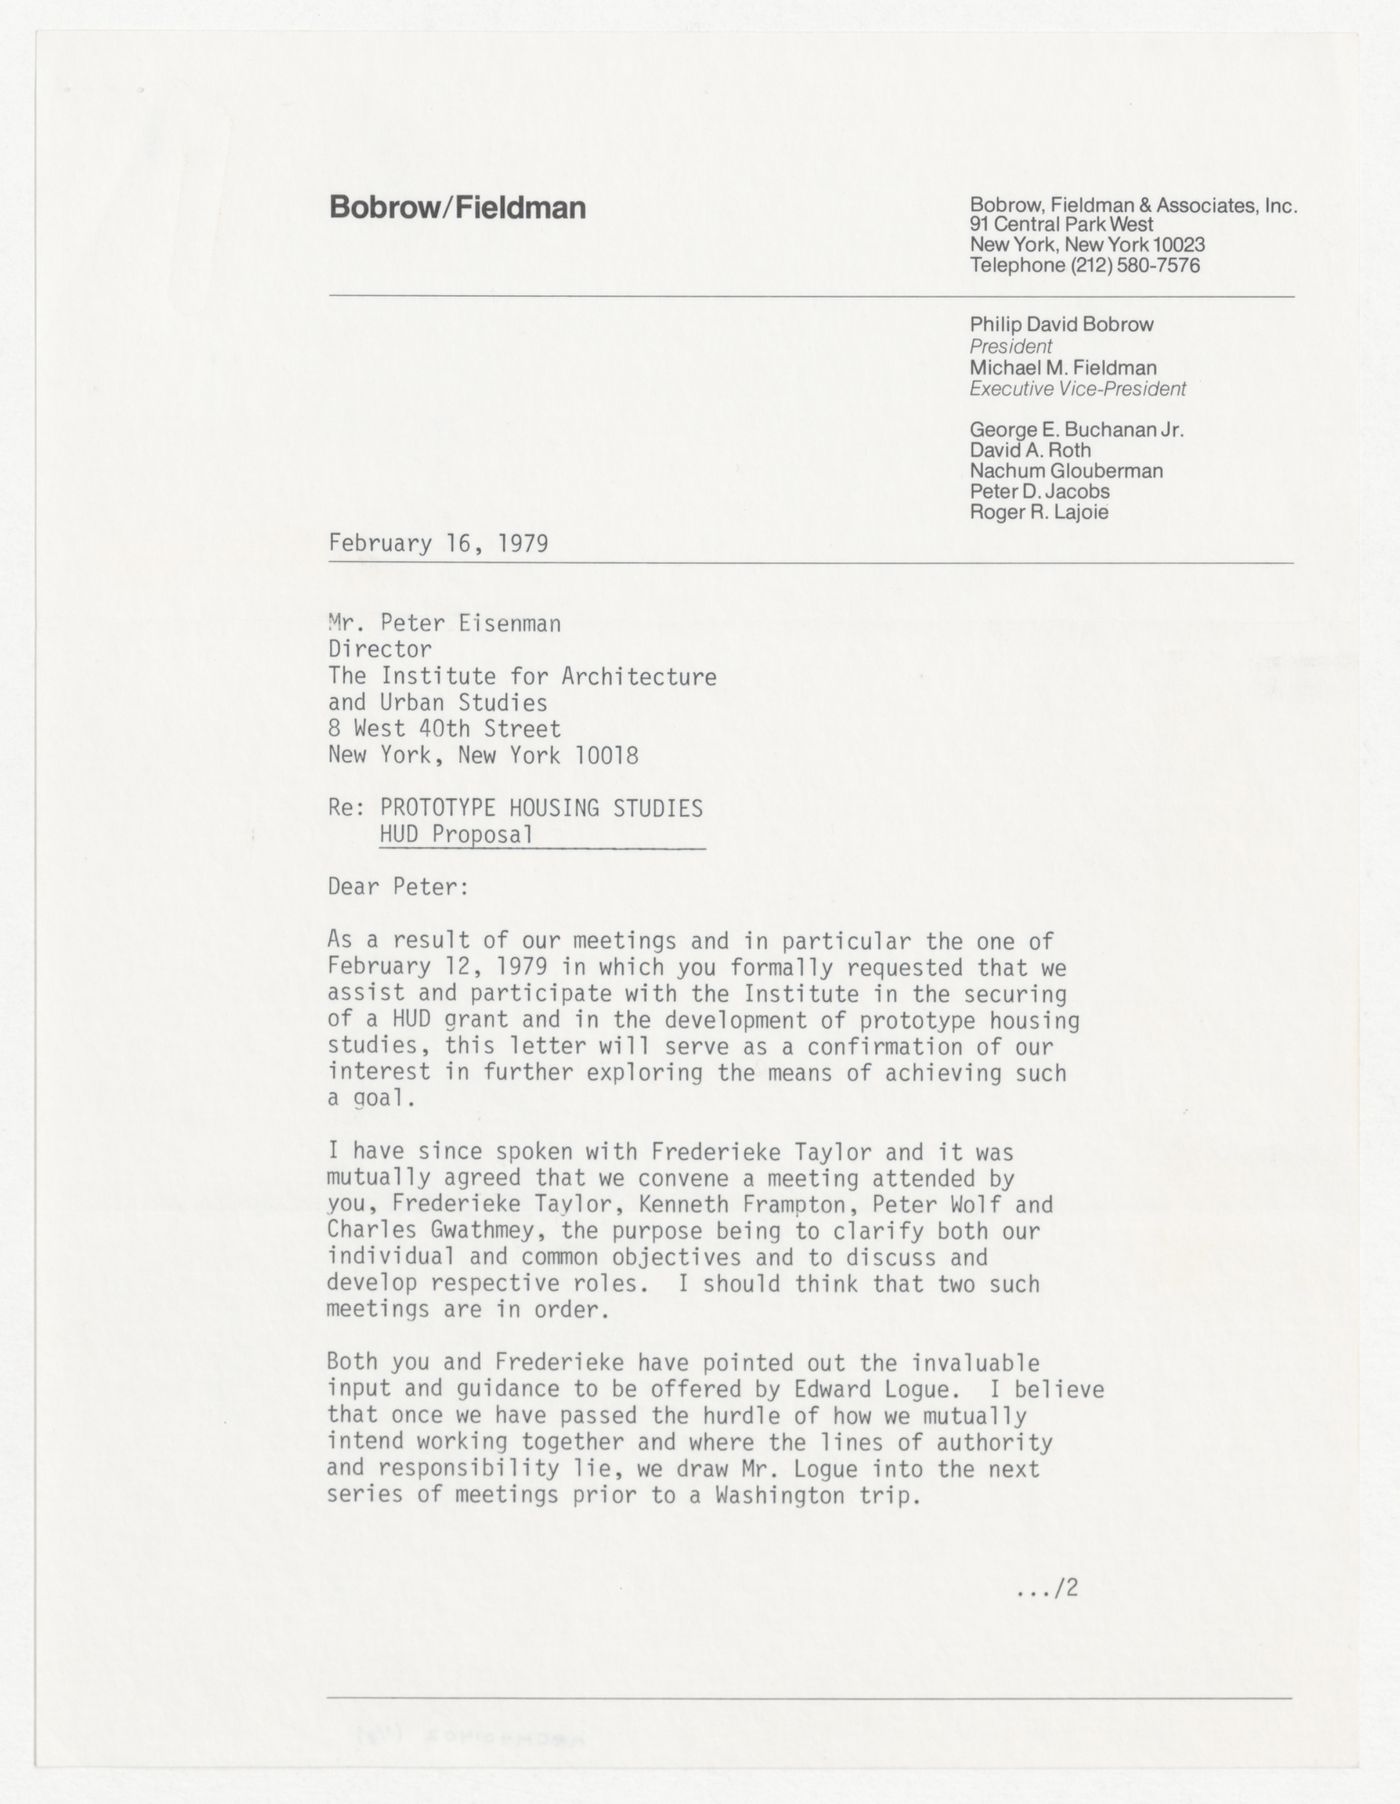 Letter from Michael M. Fieldman to Peter D. Eisenman about prototype housing studies